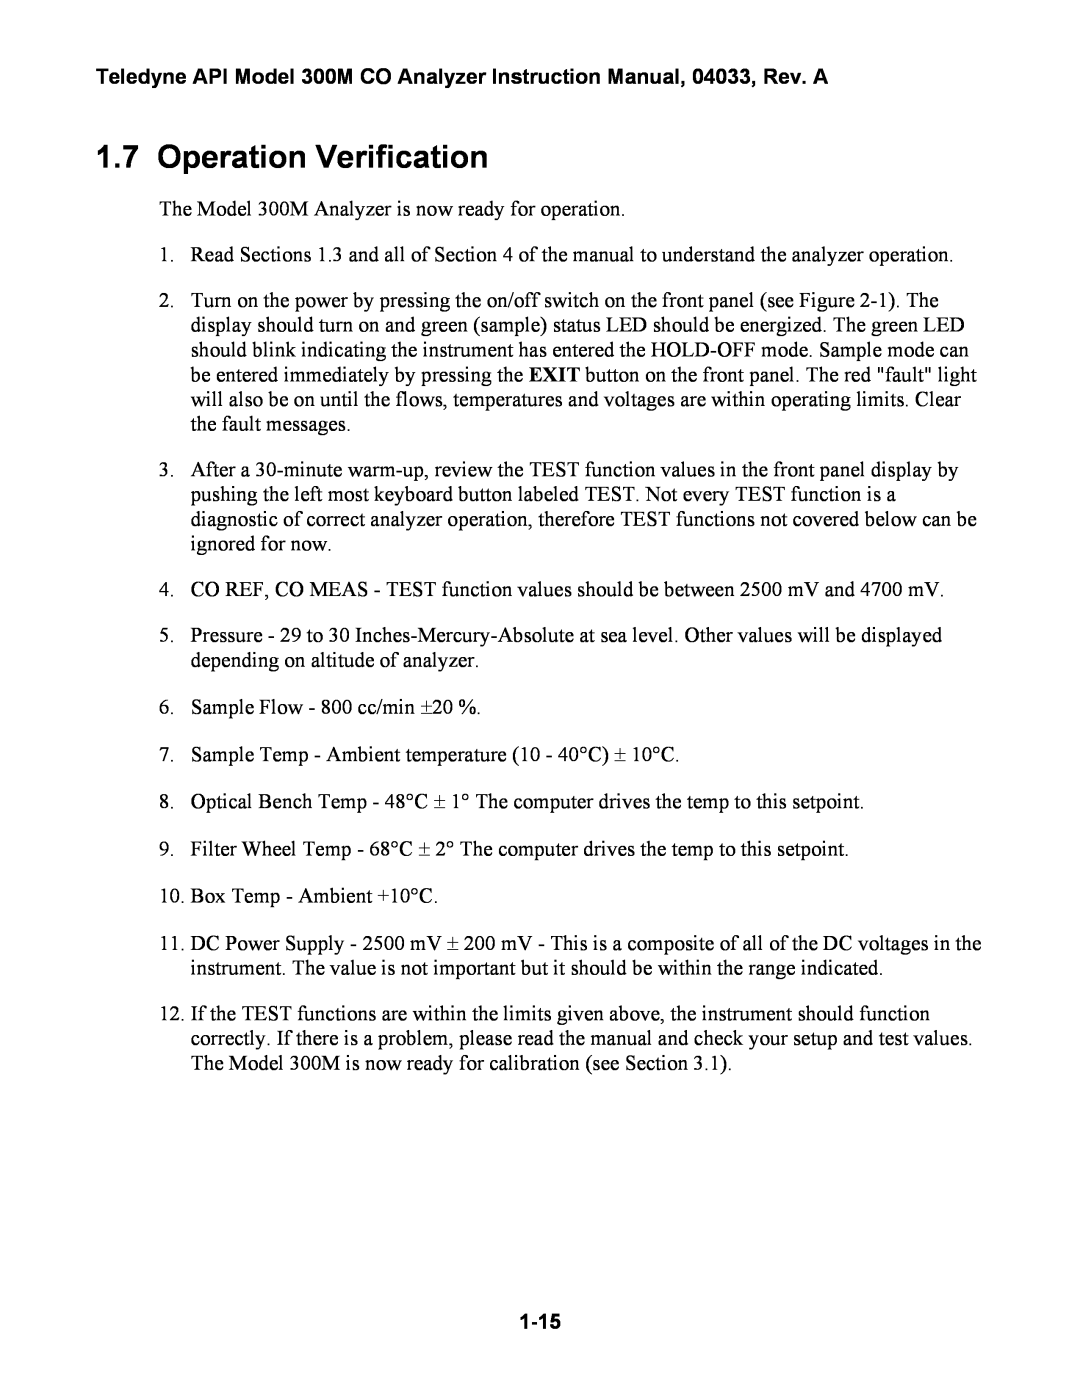 Teledyne 300M instruction manual Operation Verification, 1-15 